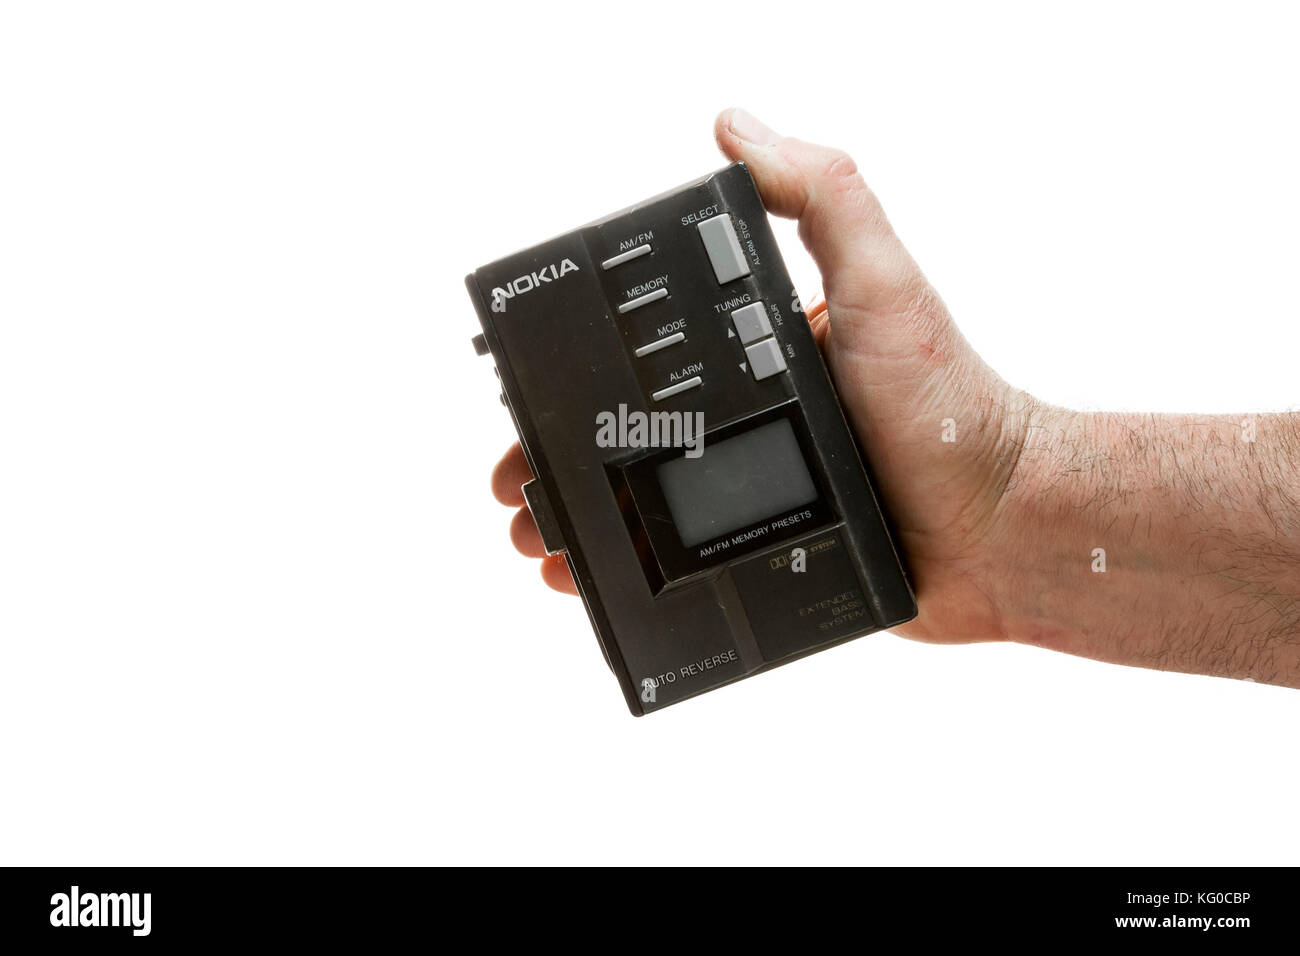 retro Walkman type casette player held in hand Stock Photo